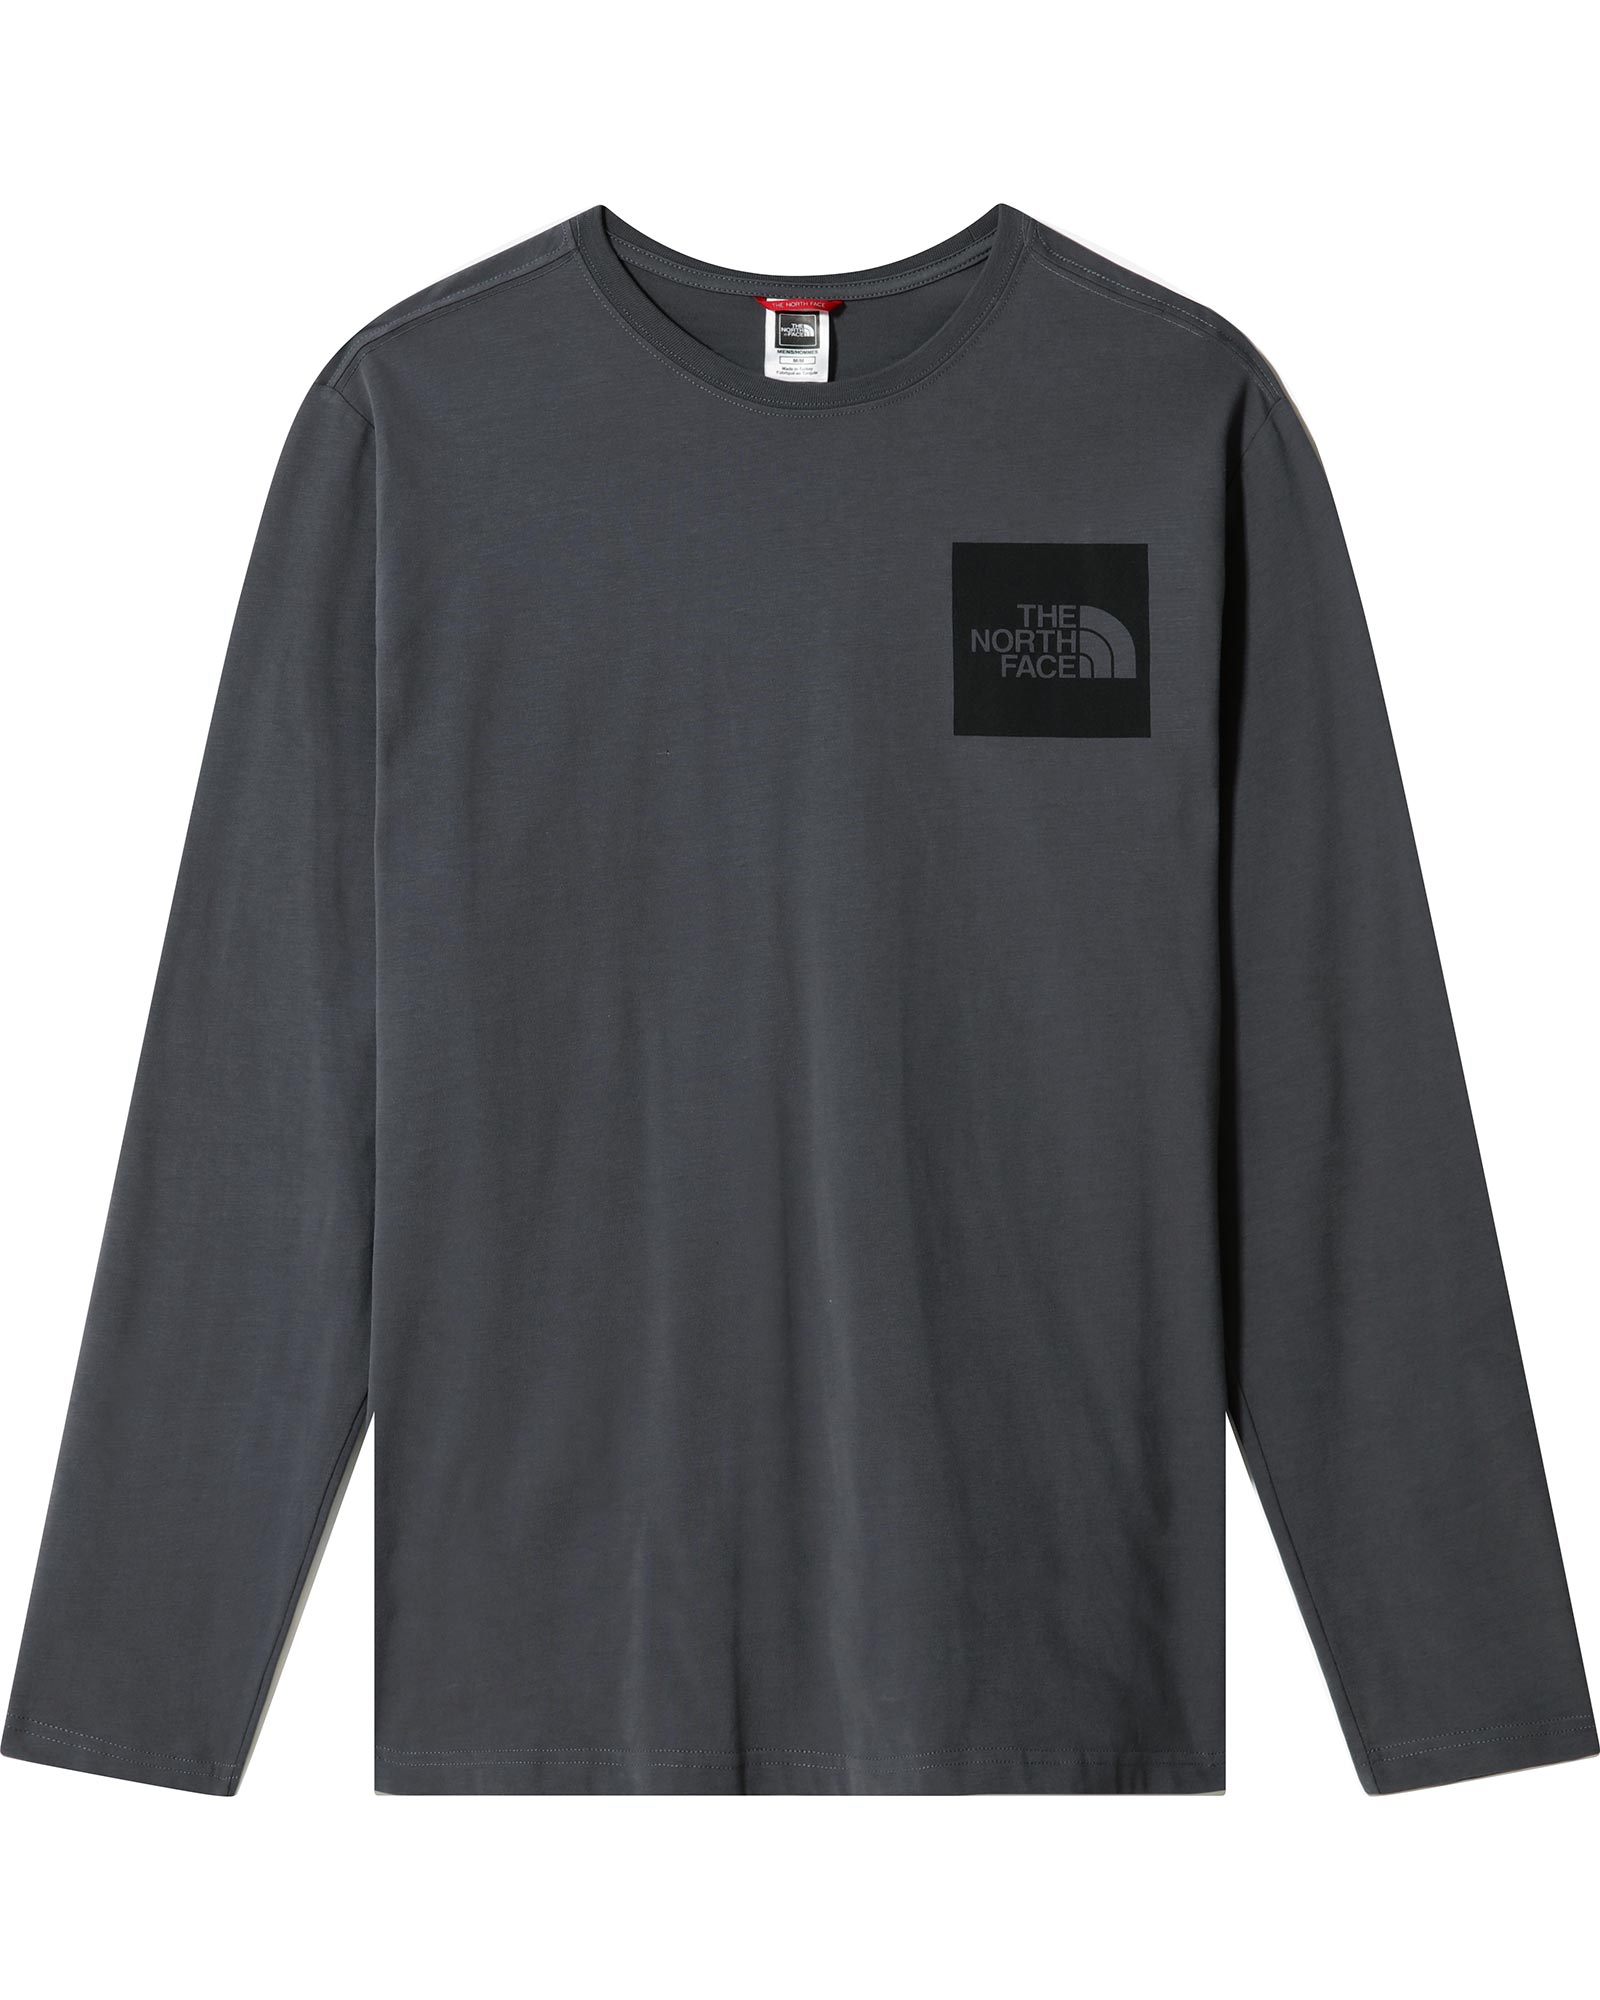 The North Face Fine Men’s Long Sleeve T Shirt - Vanadis Grey XL